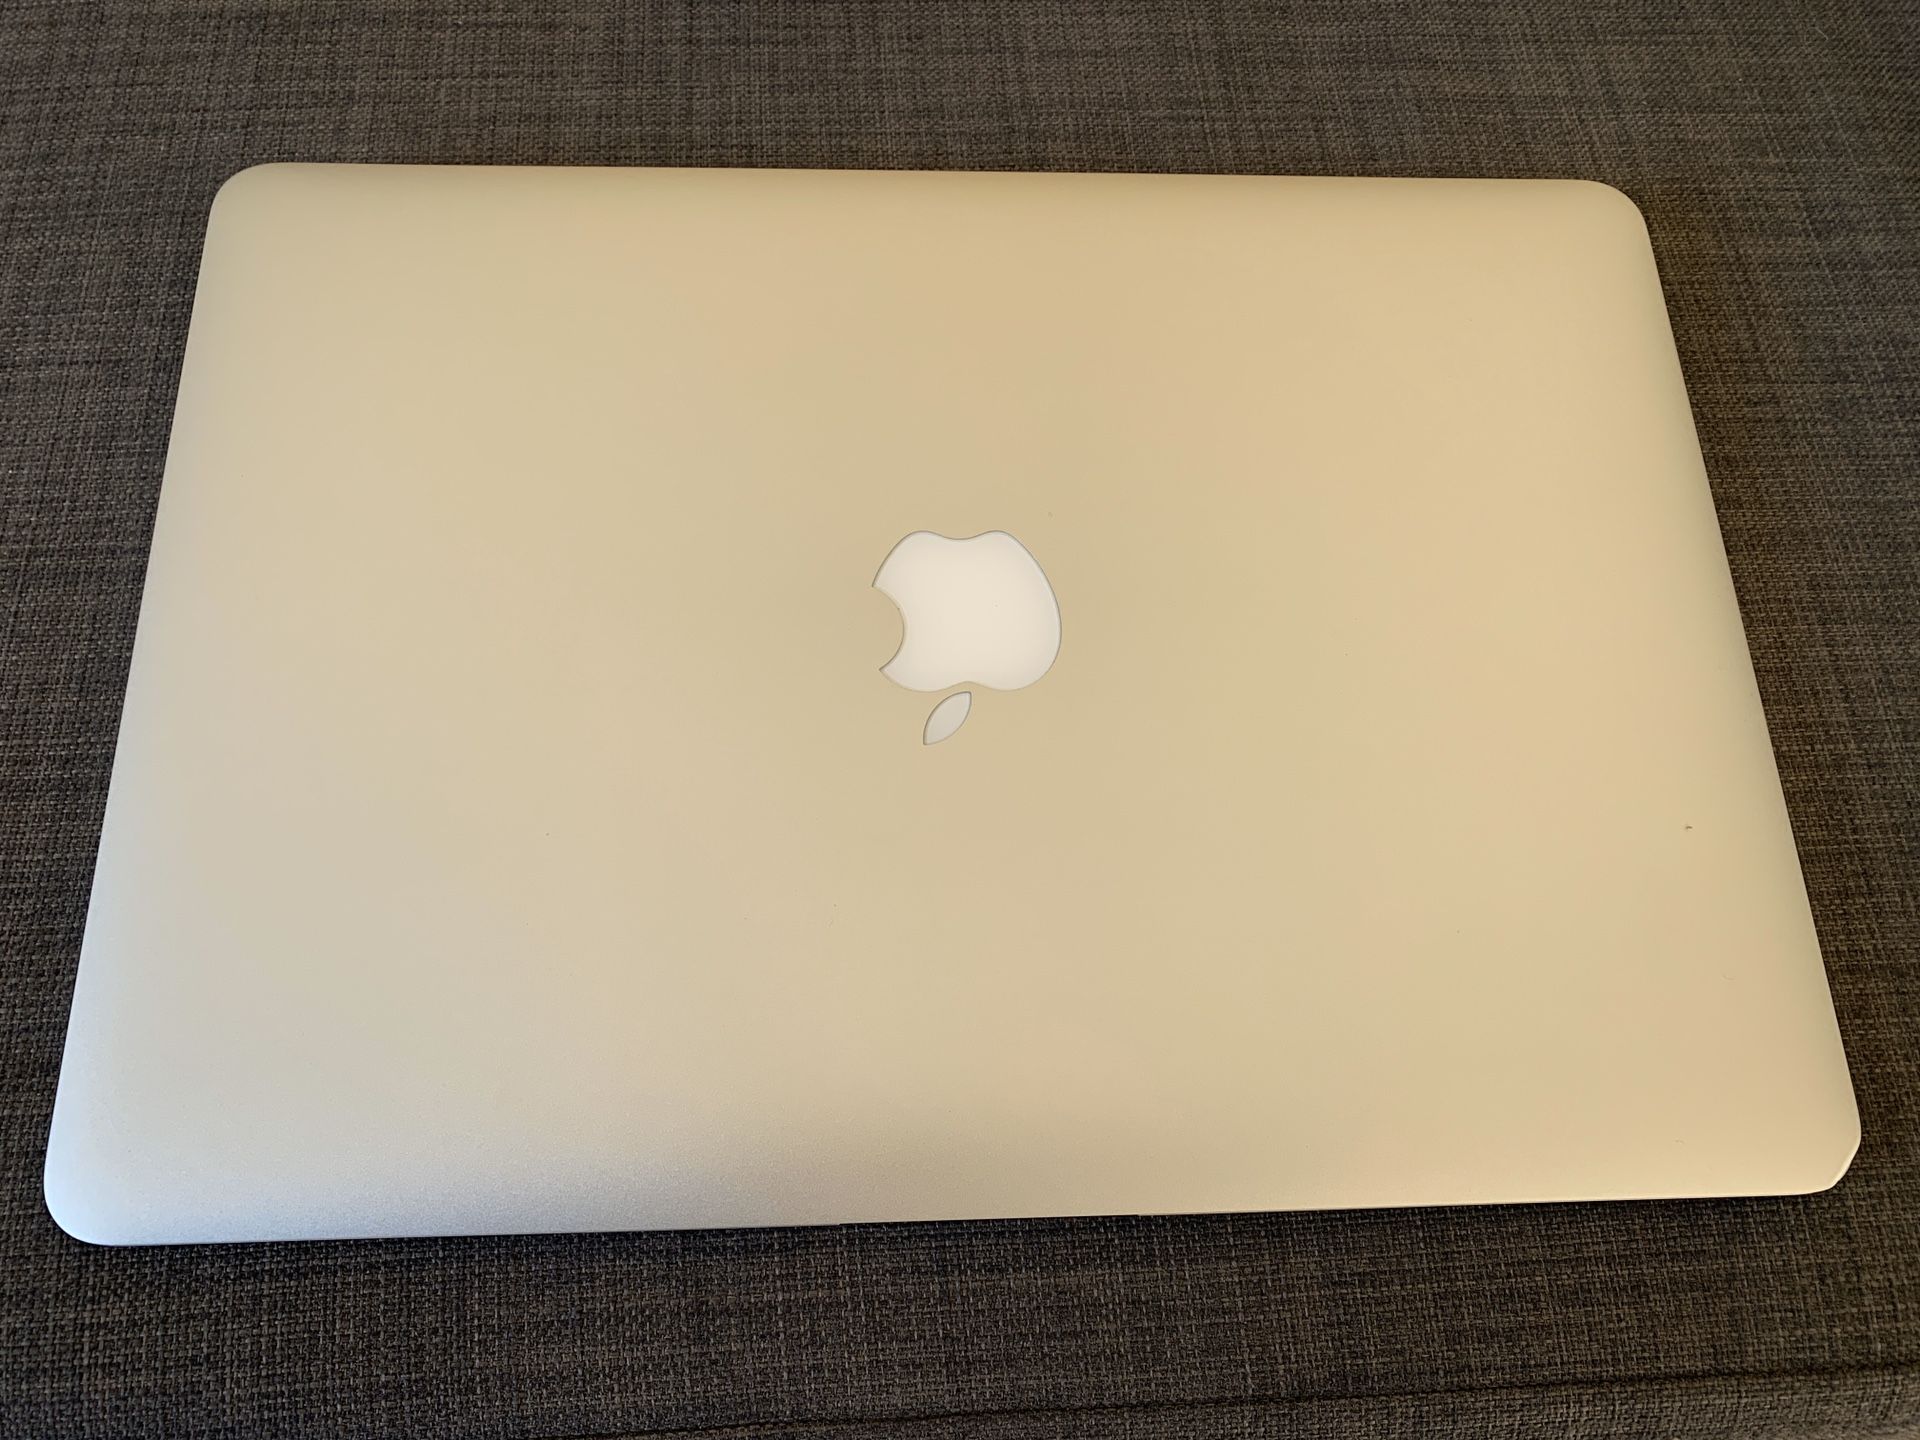 Apple MacBook Air 13inch- Early 2014, 256 GB SSD, 4 GB Ram, i5 core